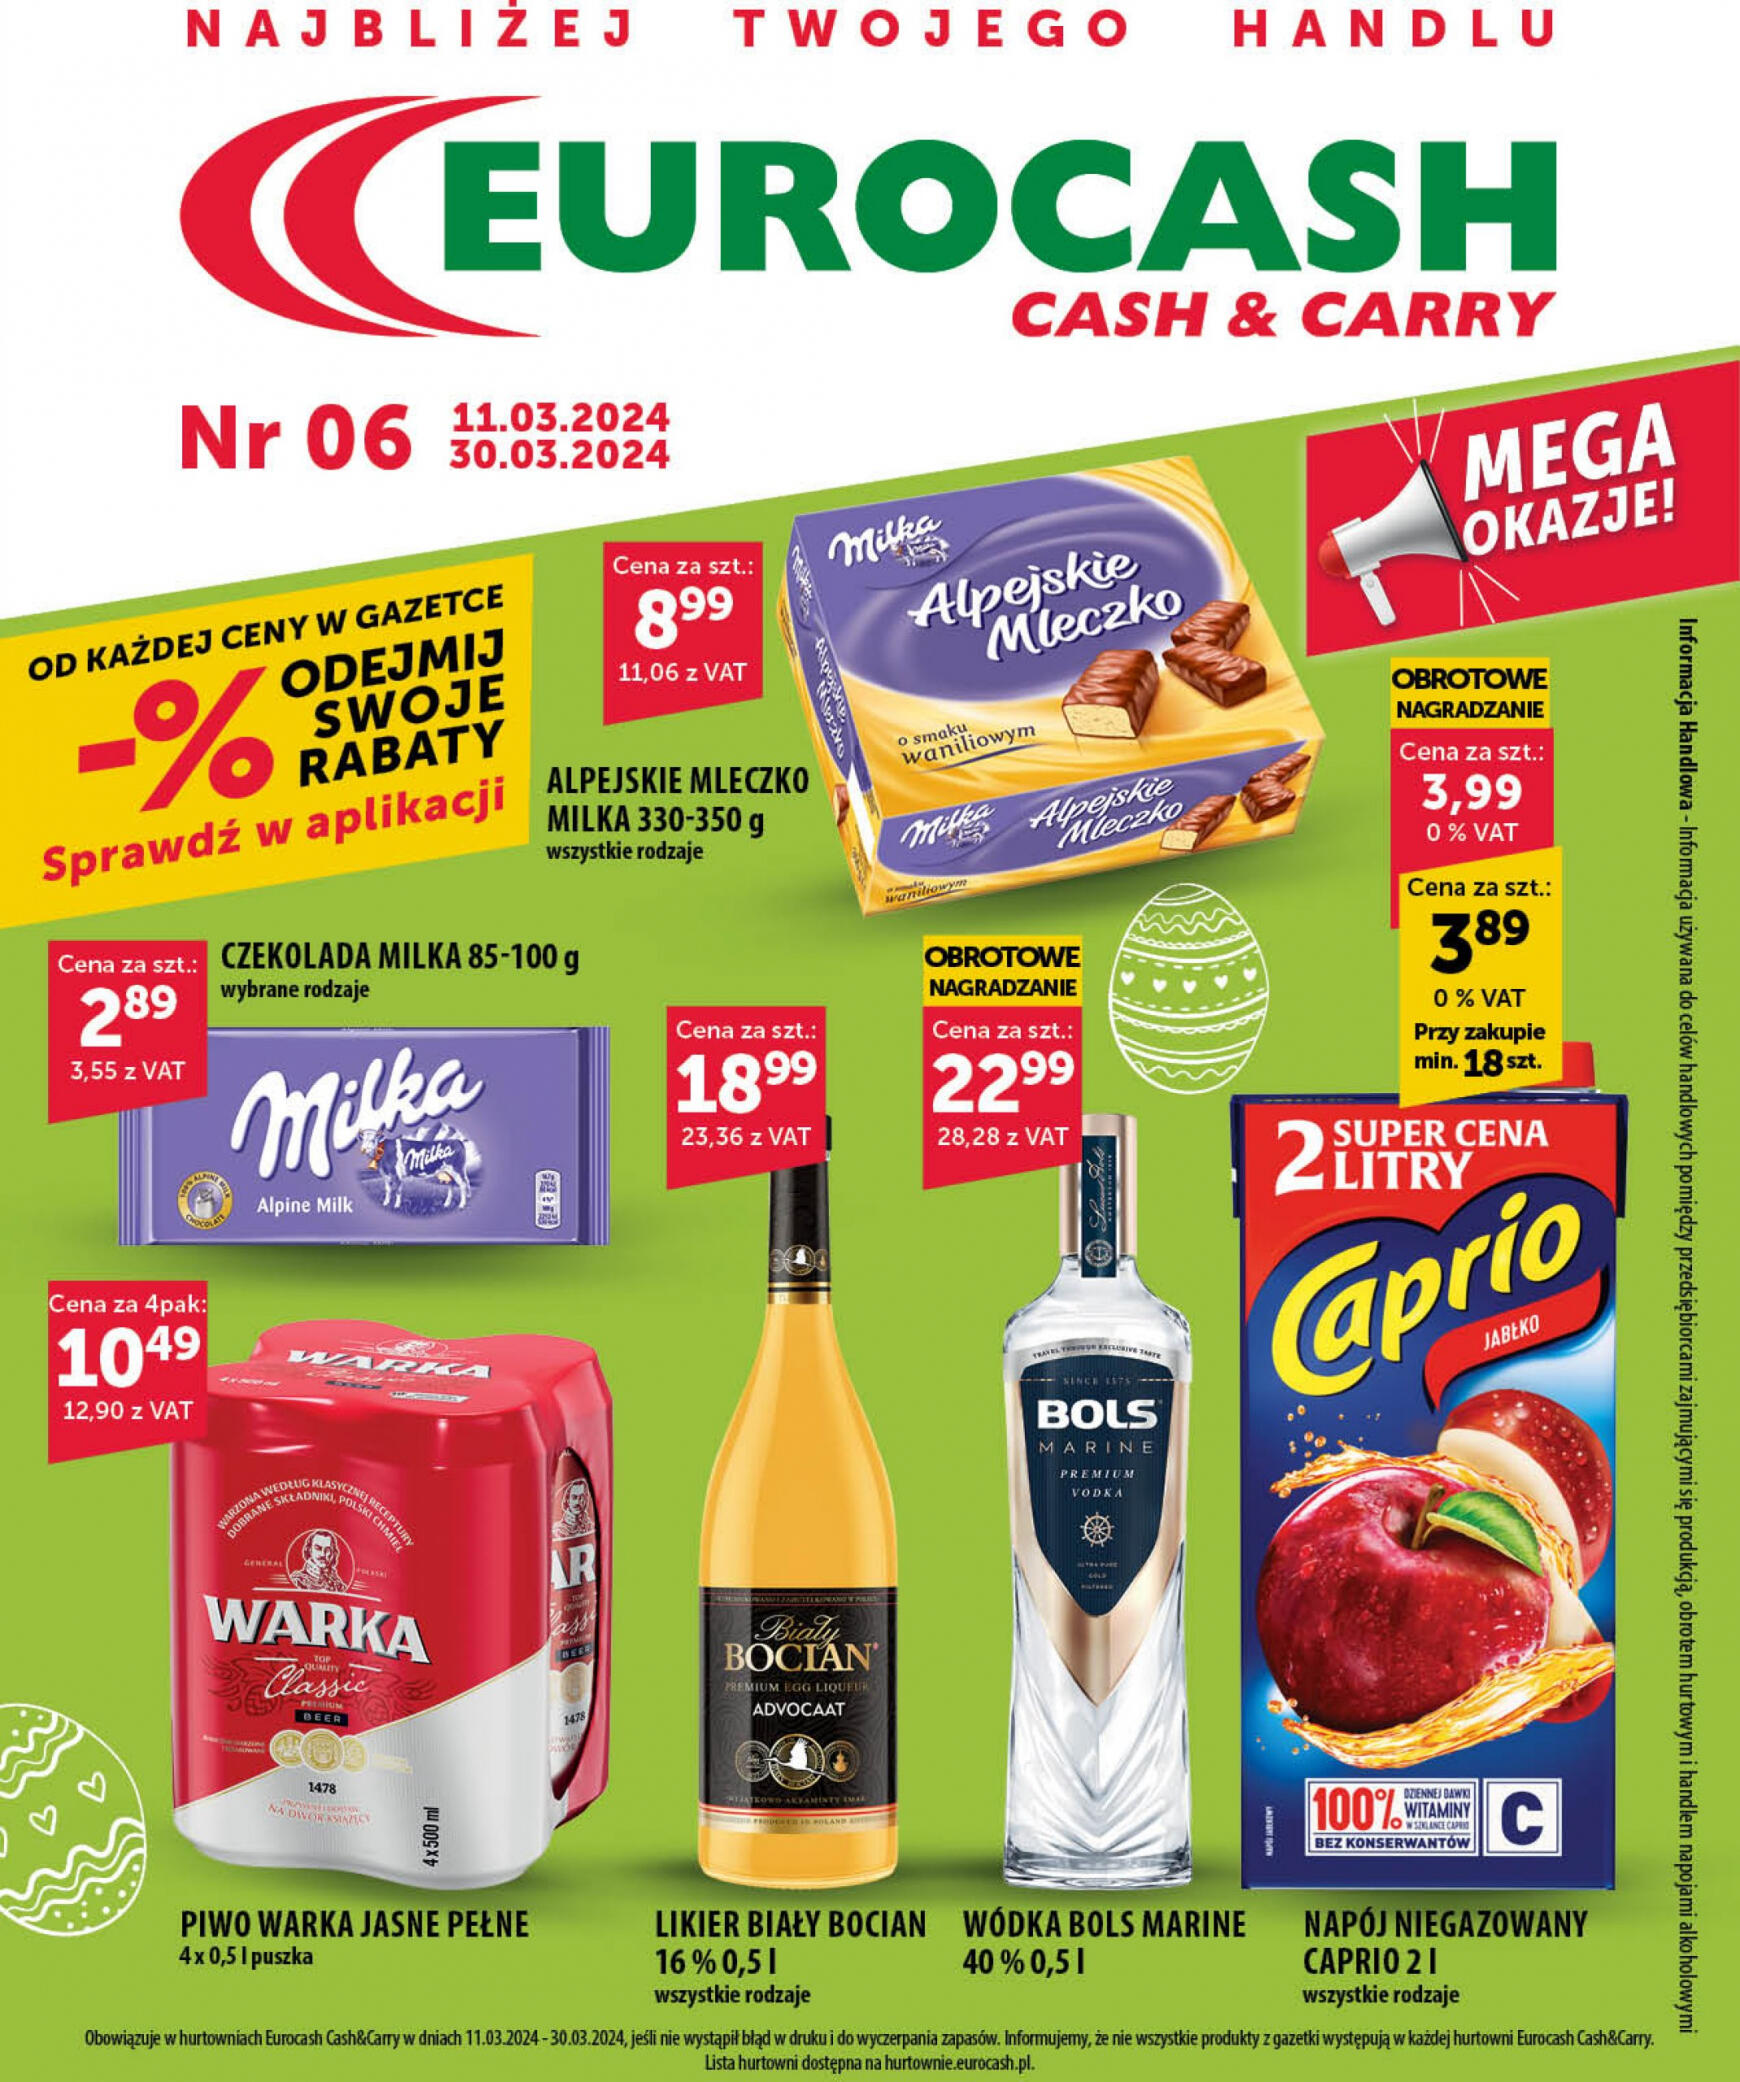 eurocash - Eurocash - Cash&Carry obowiązuje od 11.03.2024